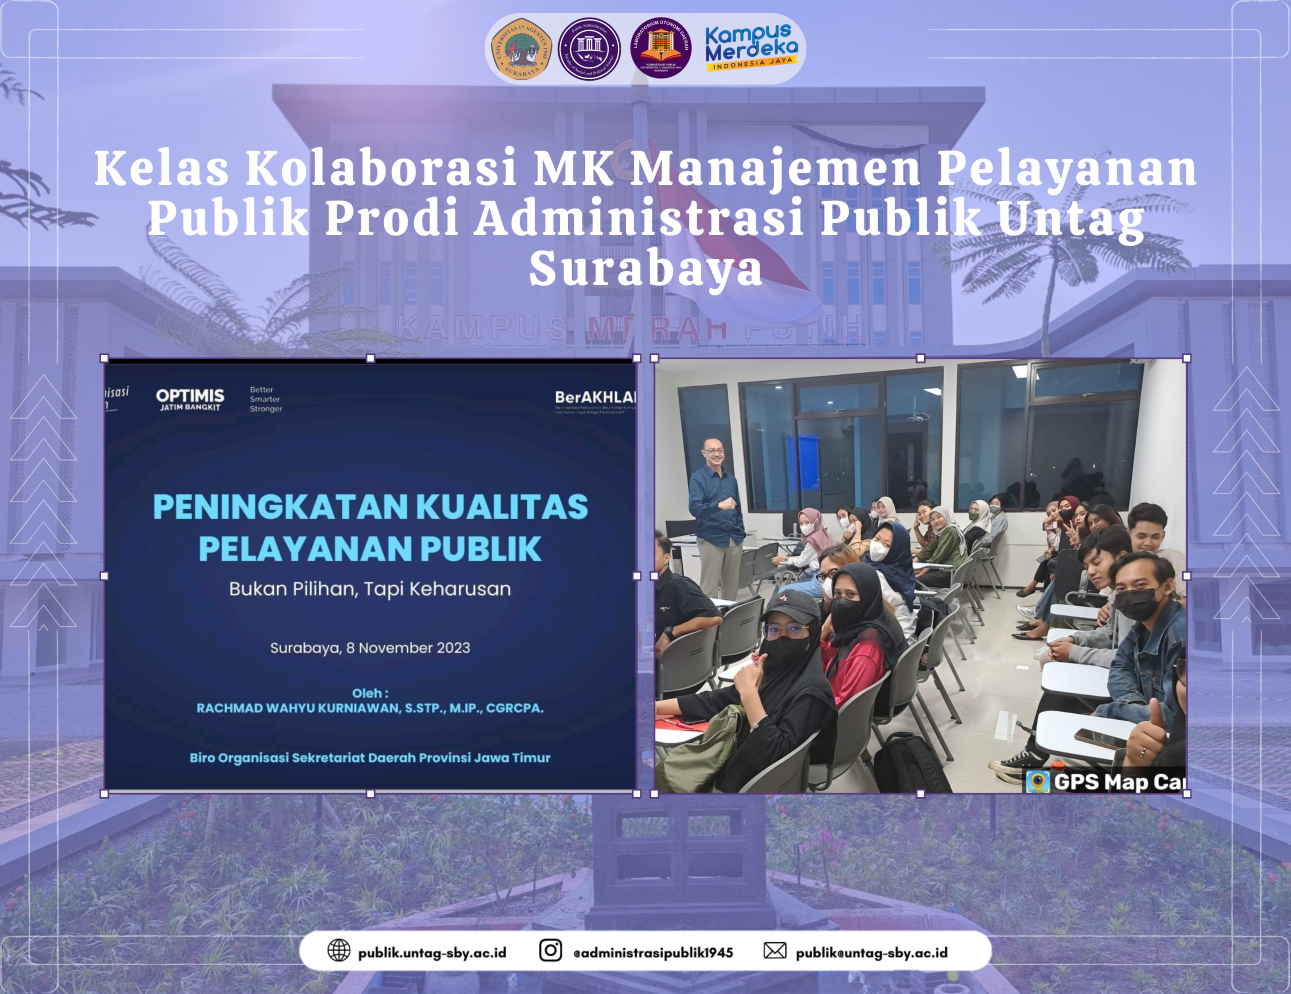 Kelas Kolaborasi MK Manajemen Pelayanan Publik Prodi Administrasi Publik Untag Surabaya